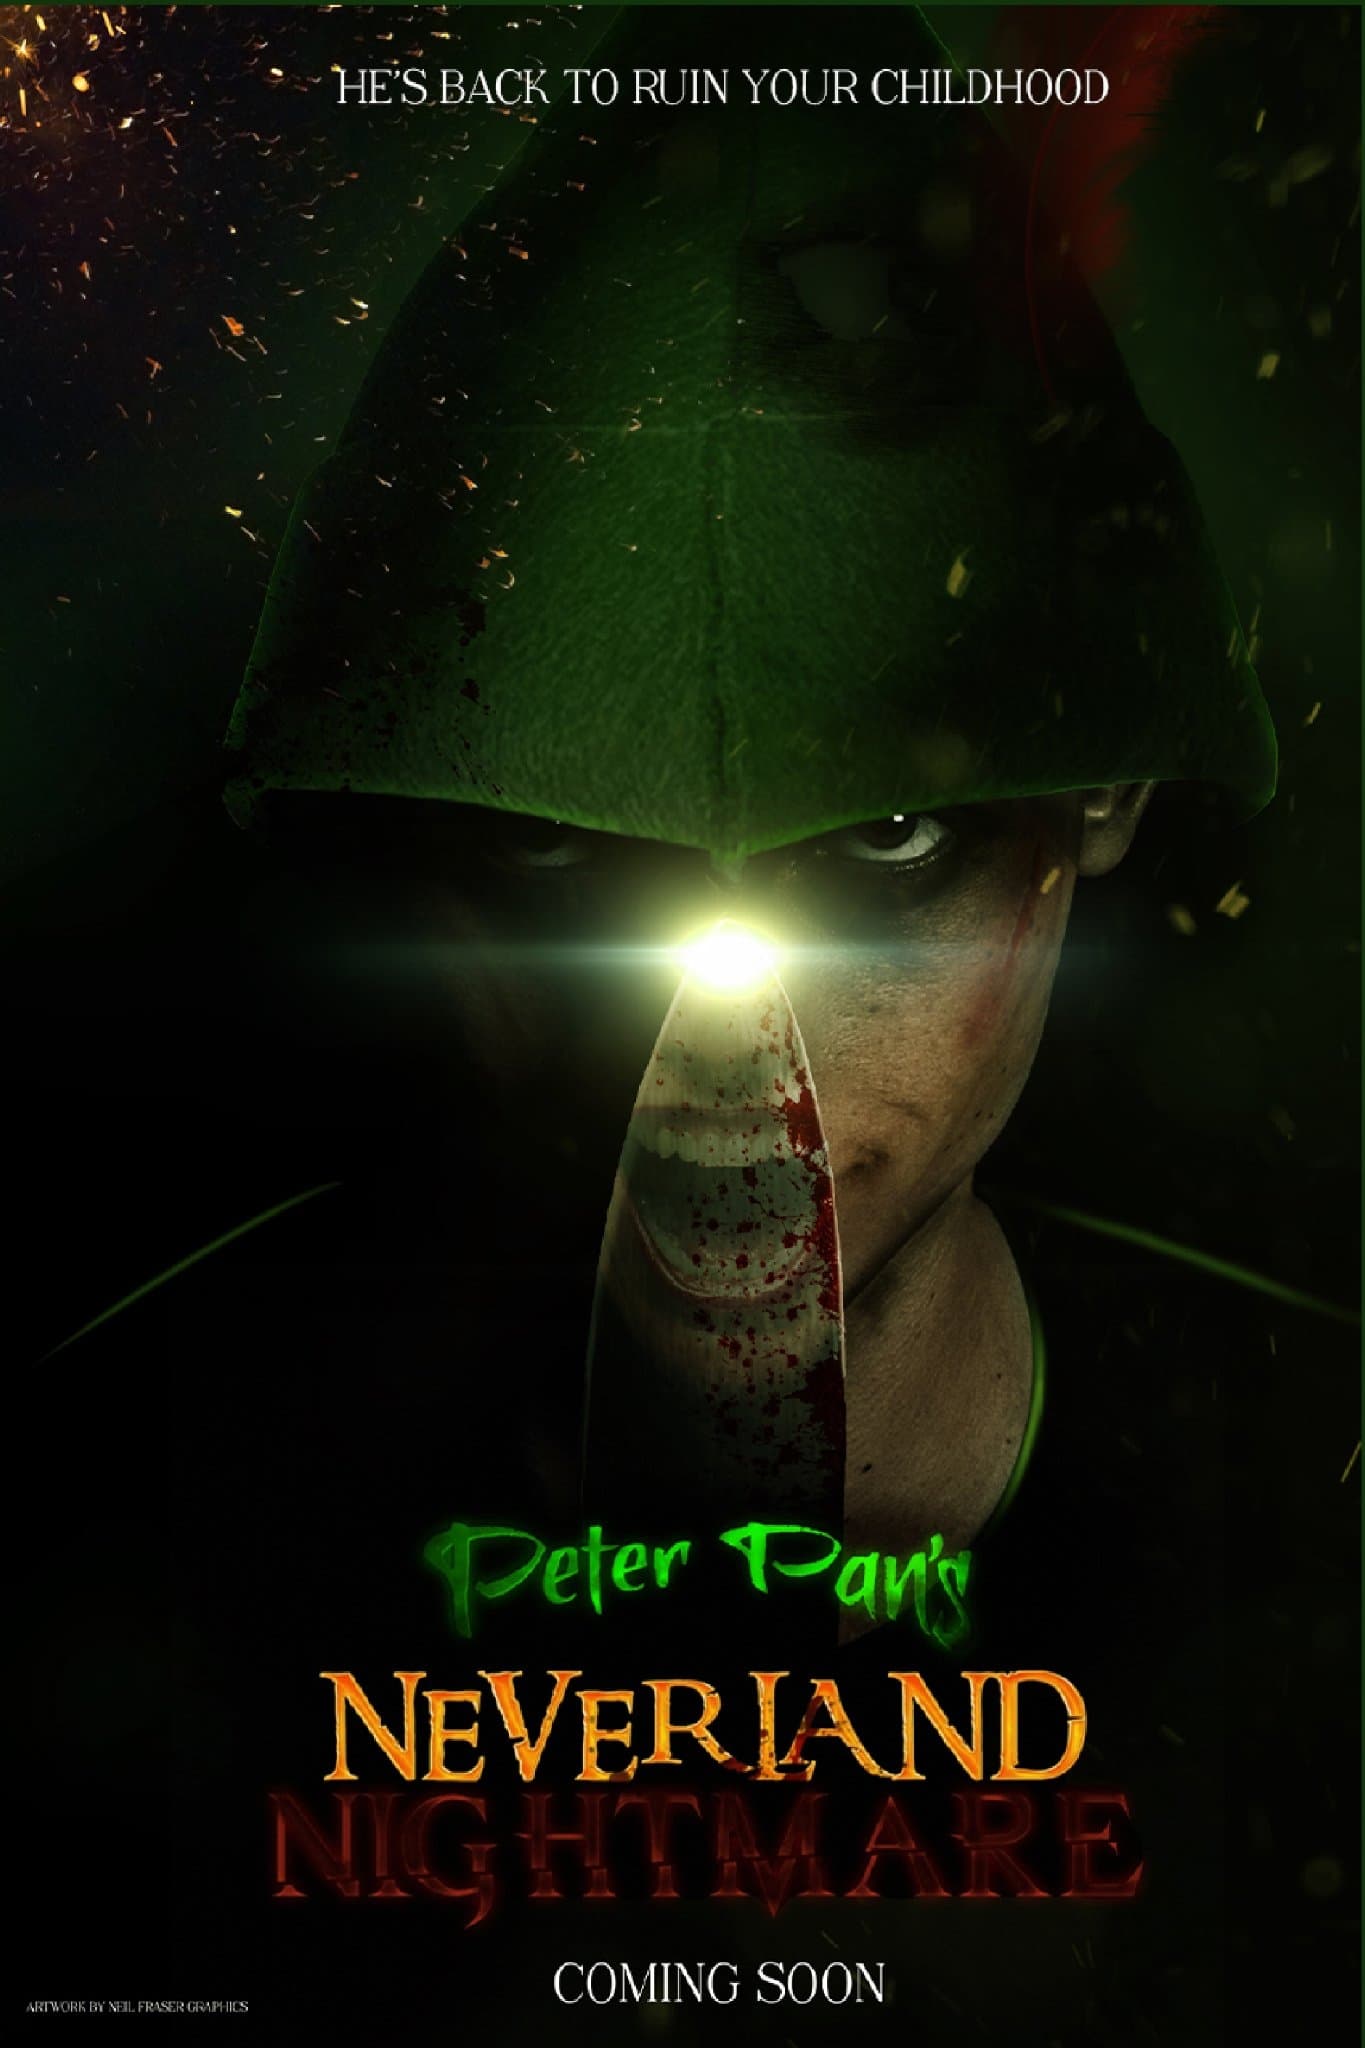 Peter Pan's Neverland Nightmare film